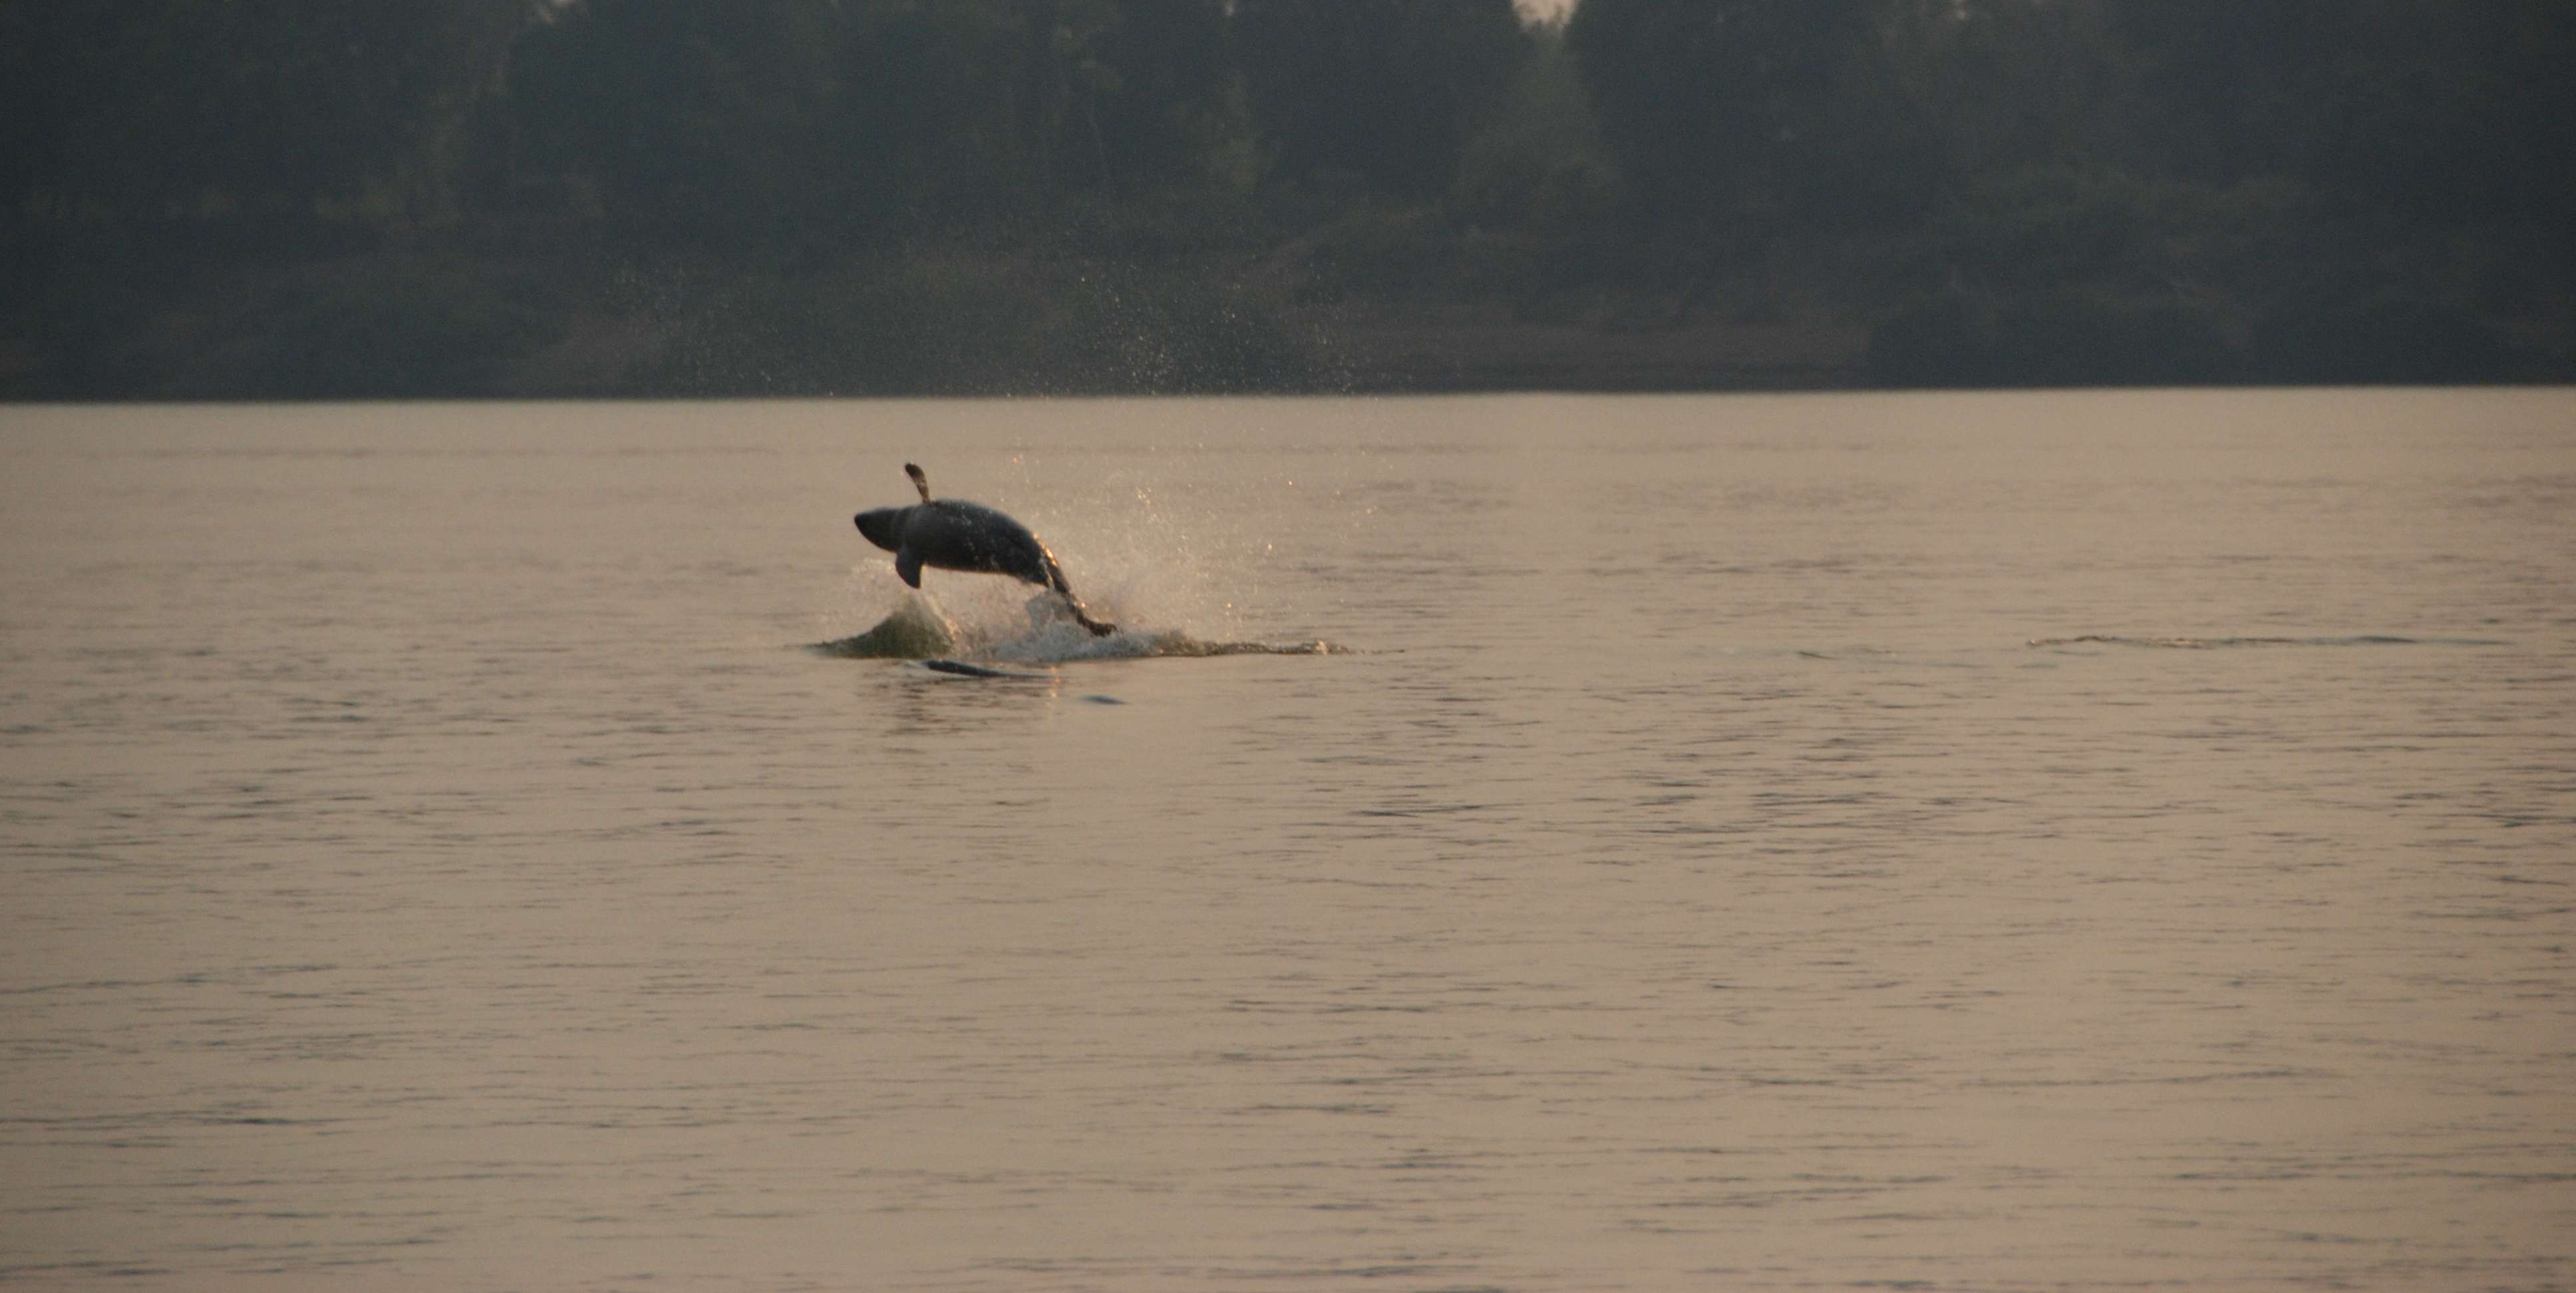 De Irrawaddydolfijnen beschermen